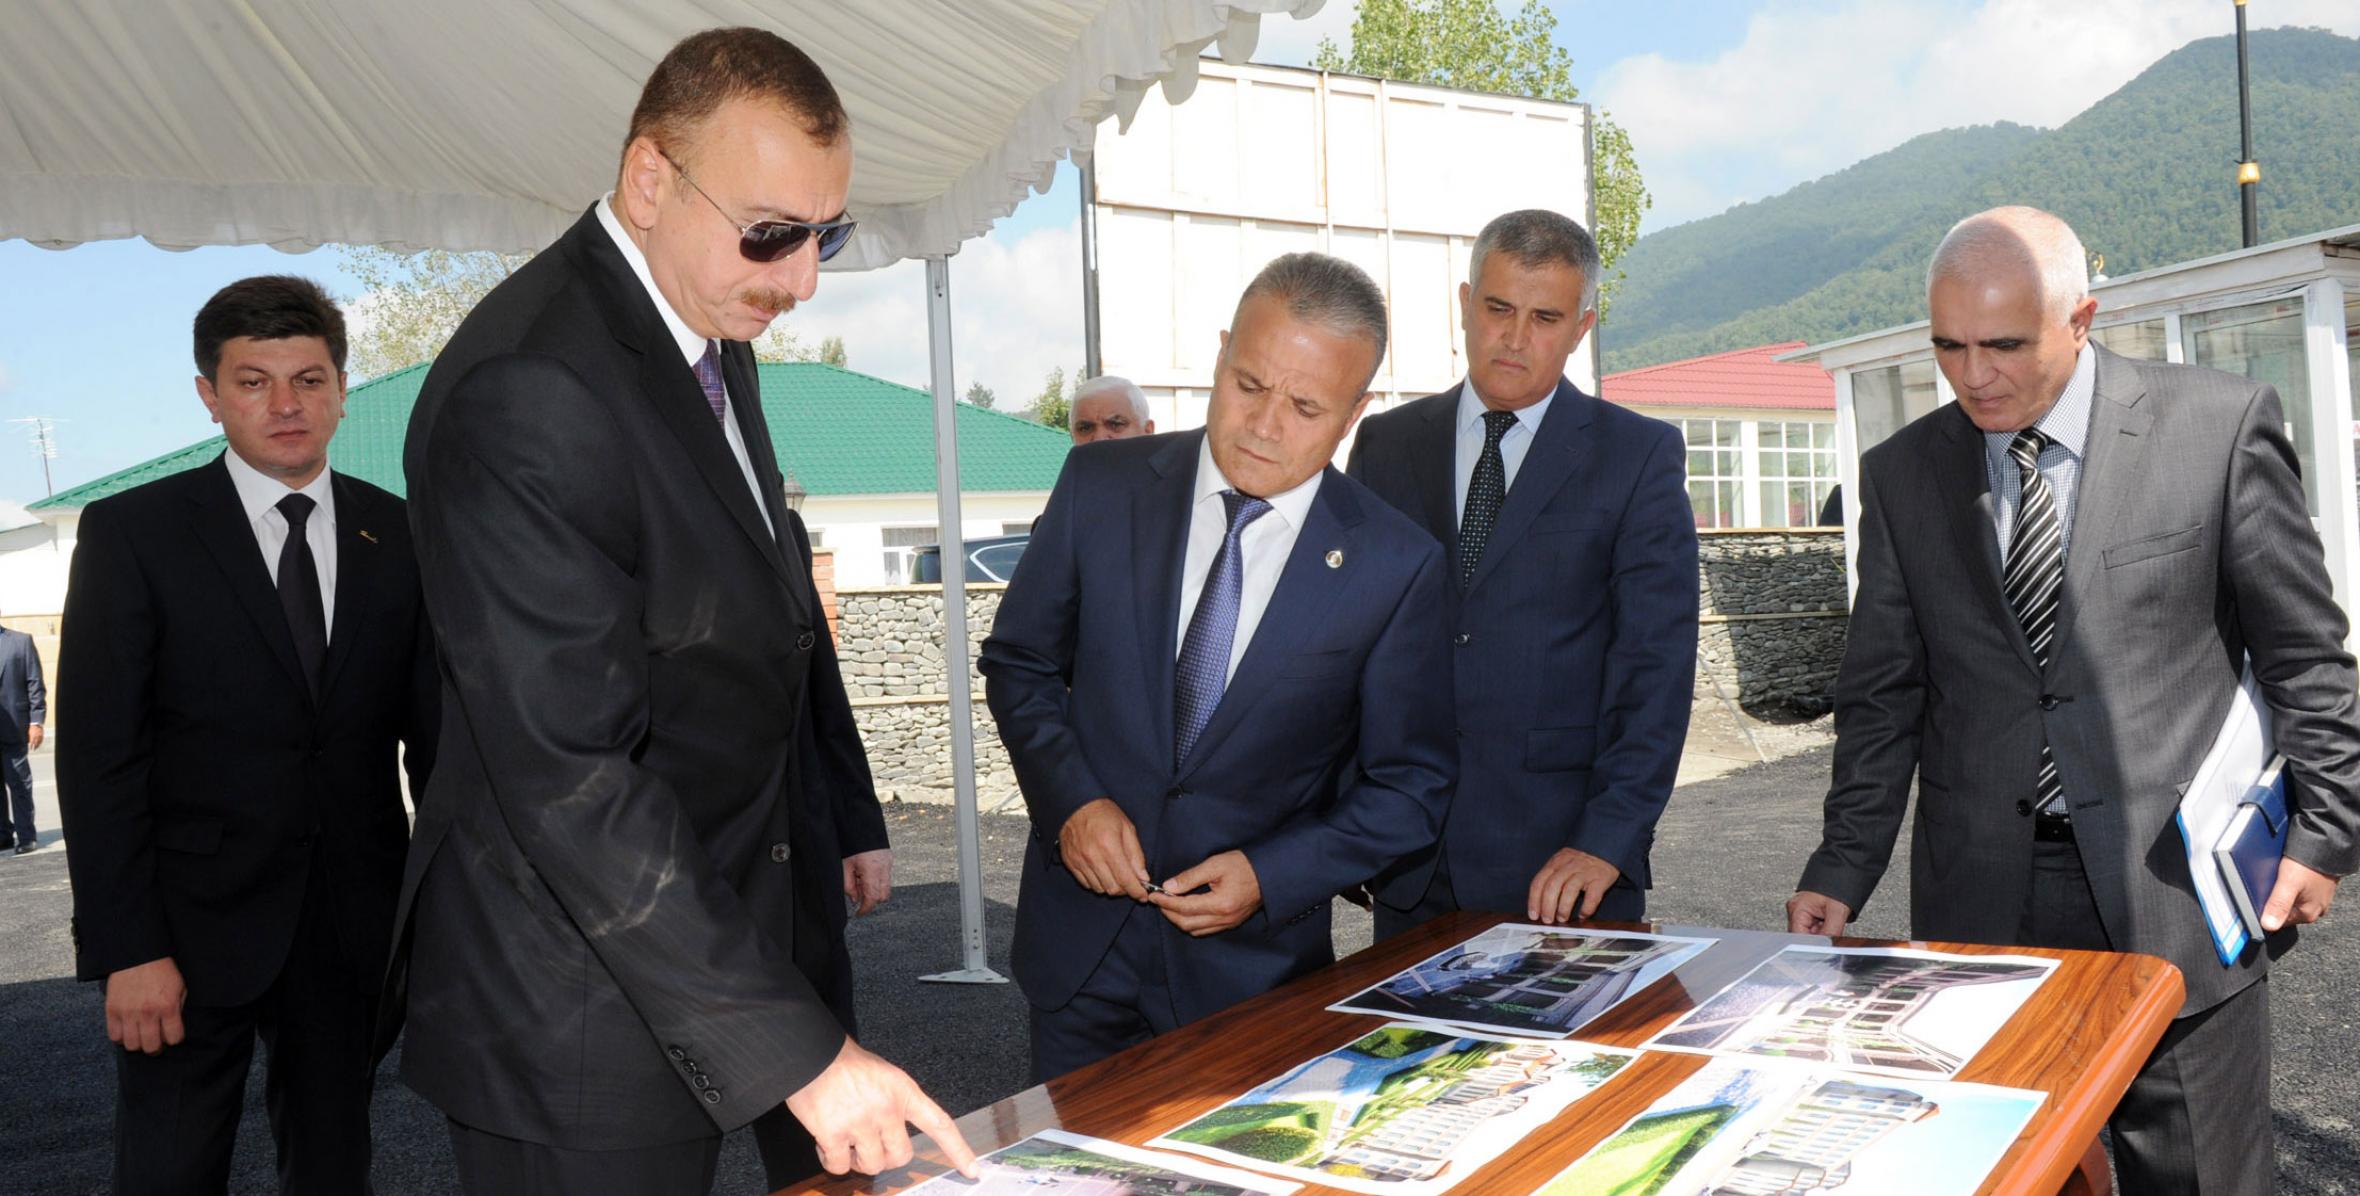 Ilham Aliyev examined the progress of construction of the “Caravanserai” hotel in Gabala